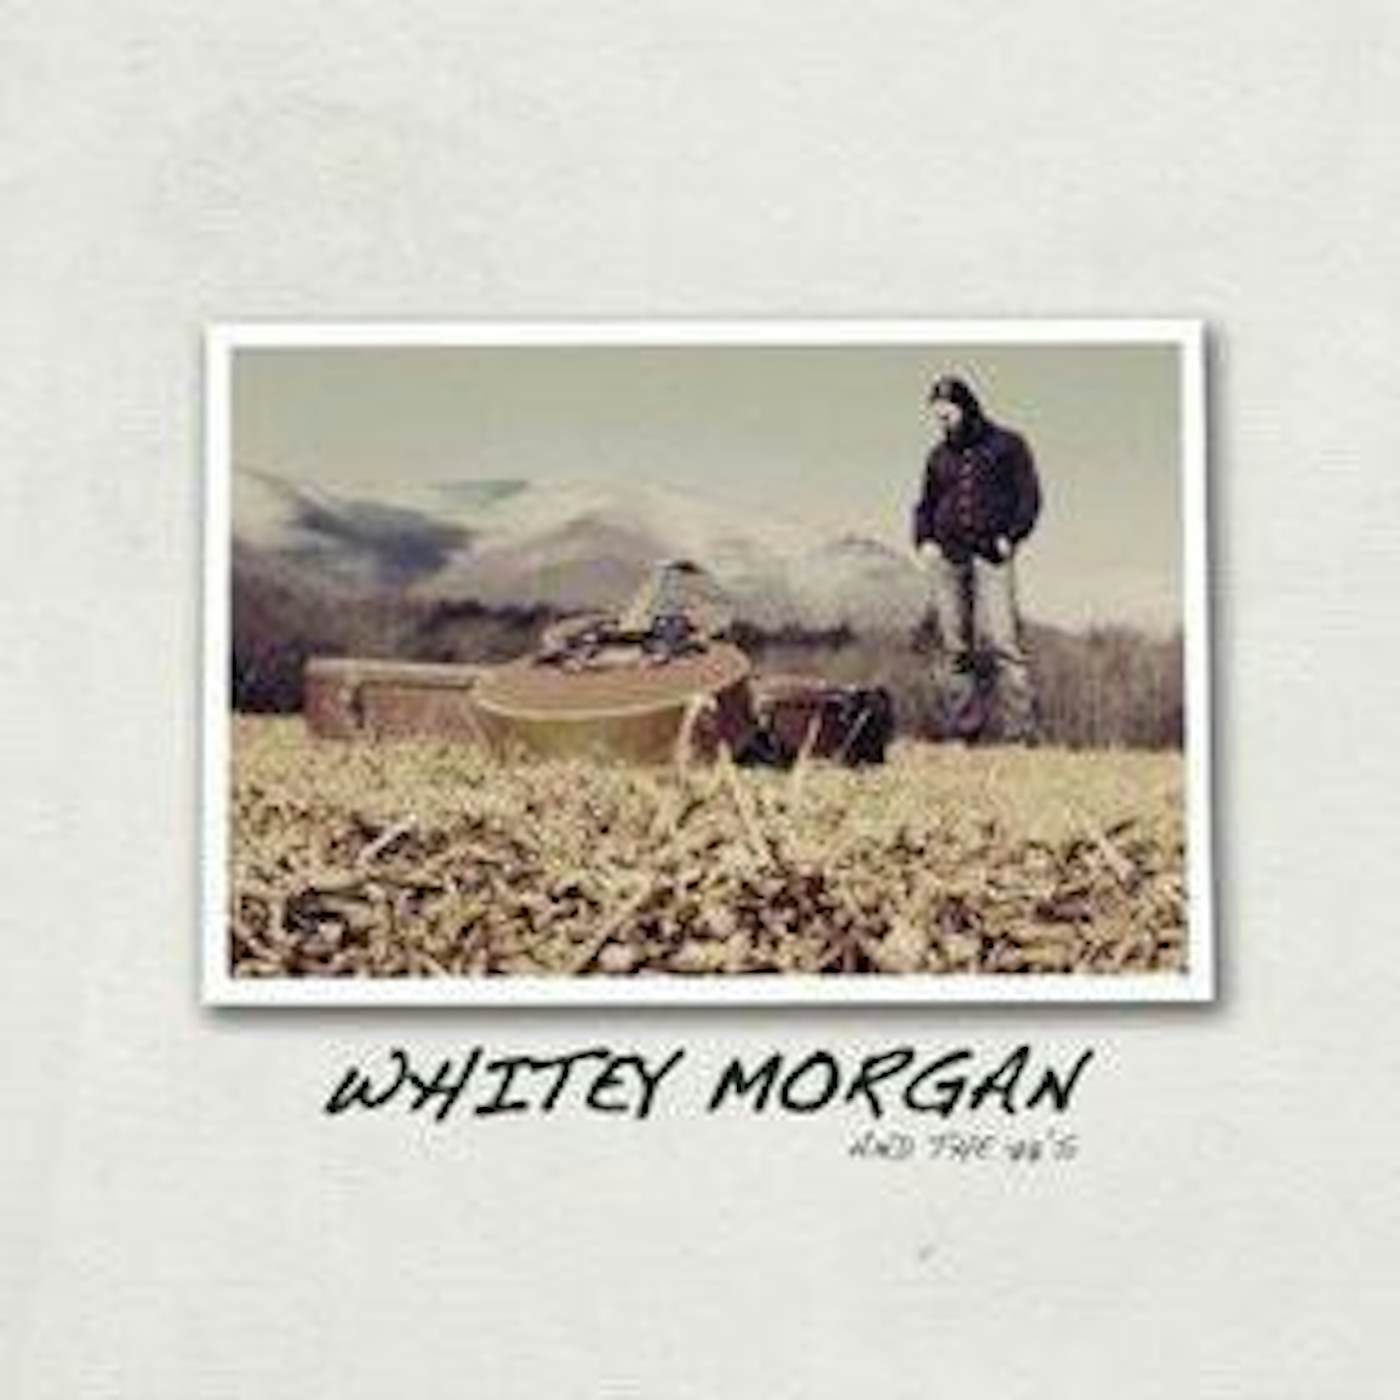 Whitey Morgan and the 78's Vinyl Record